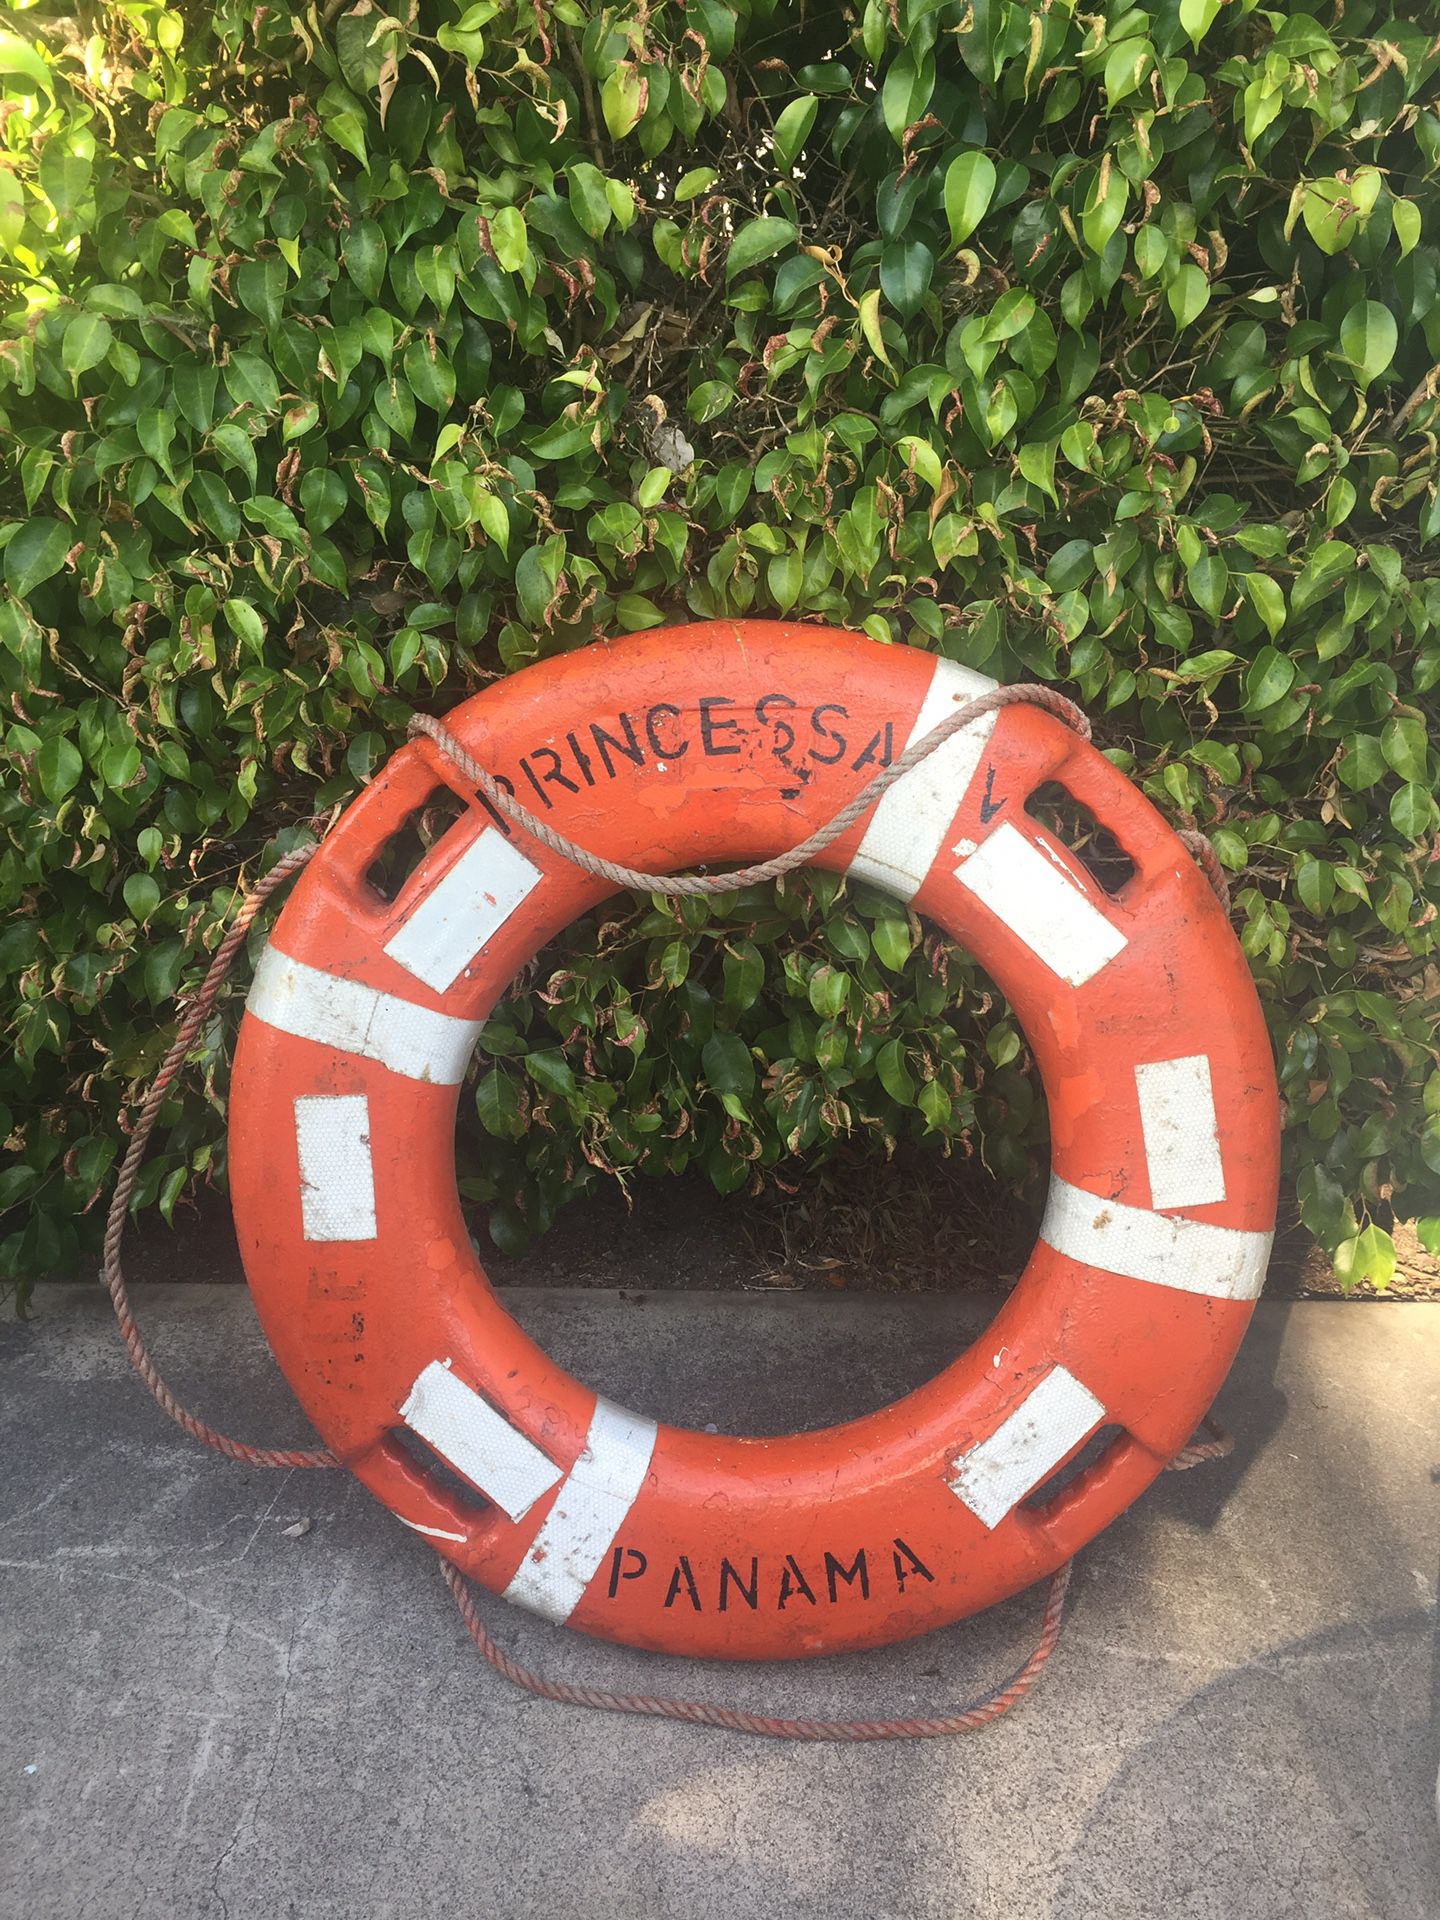 lifebuoy, ring buoy, lifering, lifesaver, life donut, life preserver